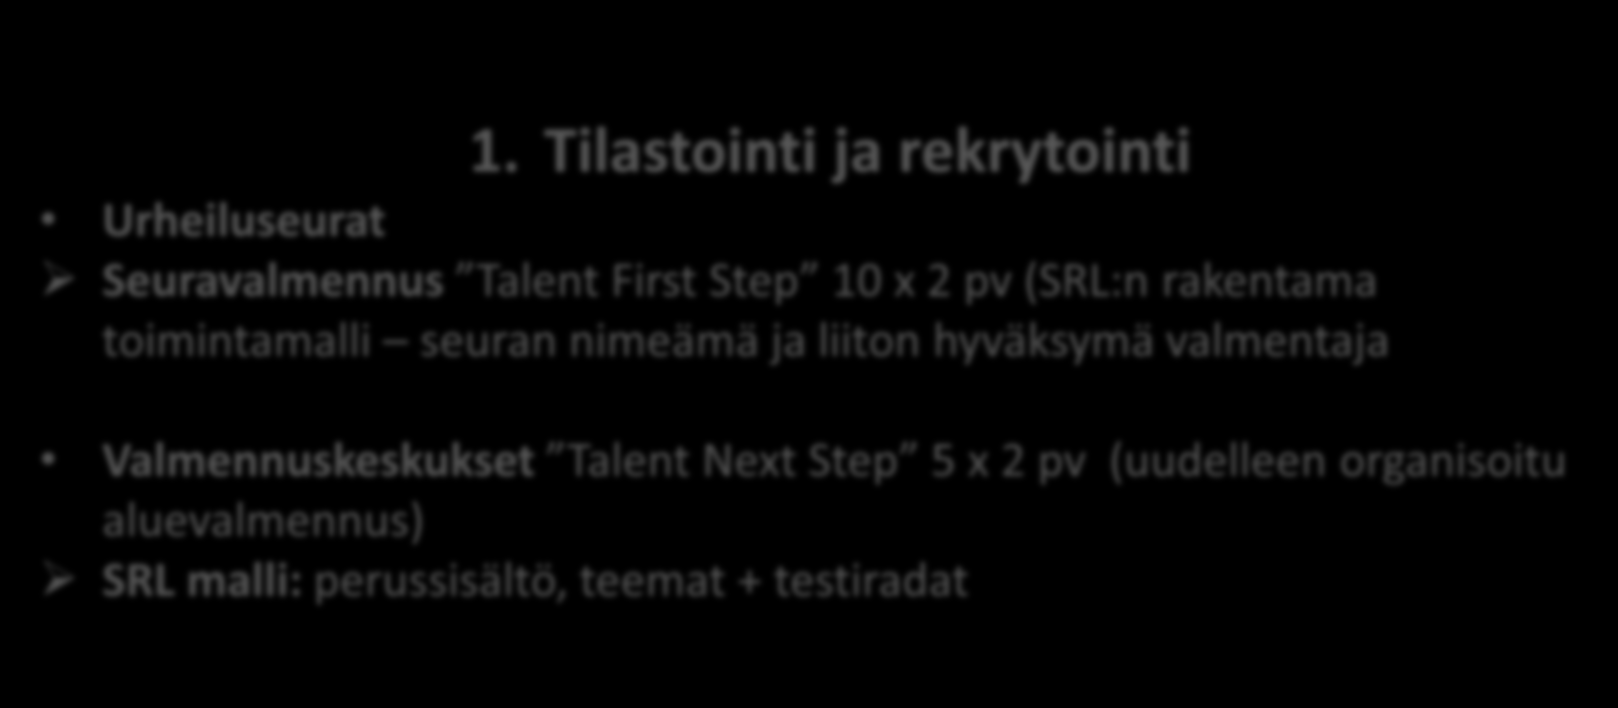 1. Tilastointi ja rekrytointi Urheiluseurat Seuravalmennus Talent First Step 10 x 2 pv (SRL:n rakentama toimintamalli seuran nimeämä ja liiton